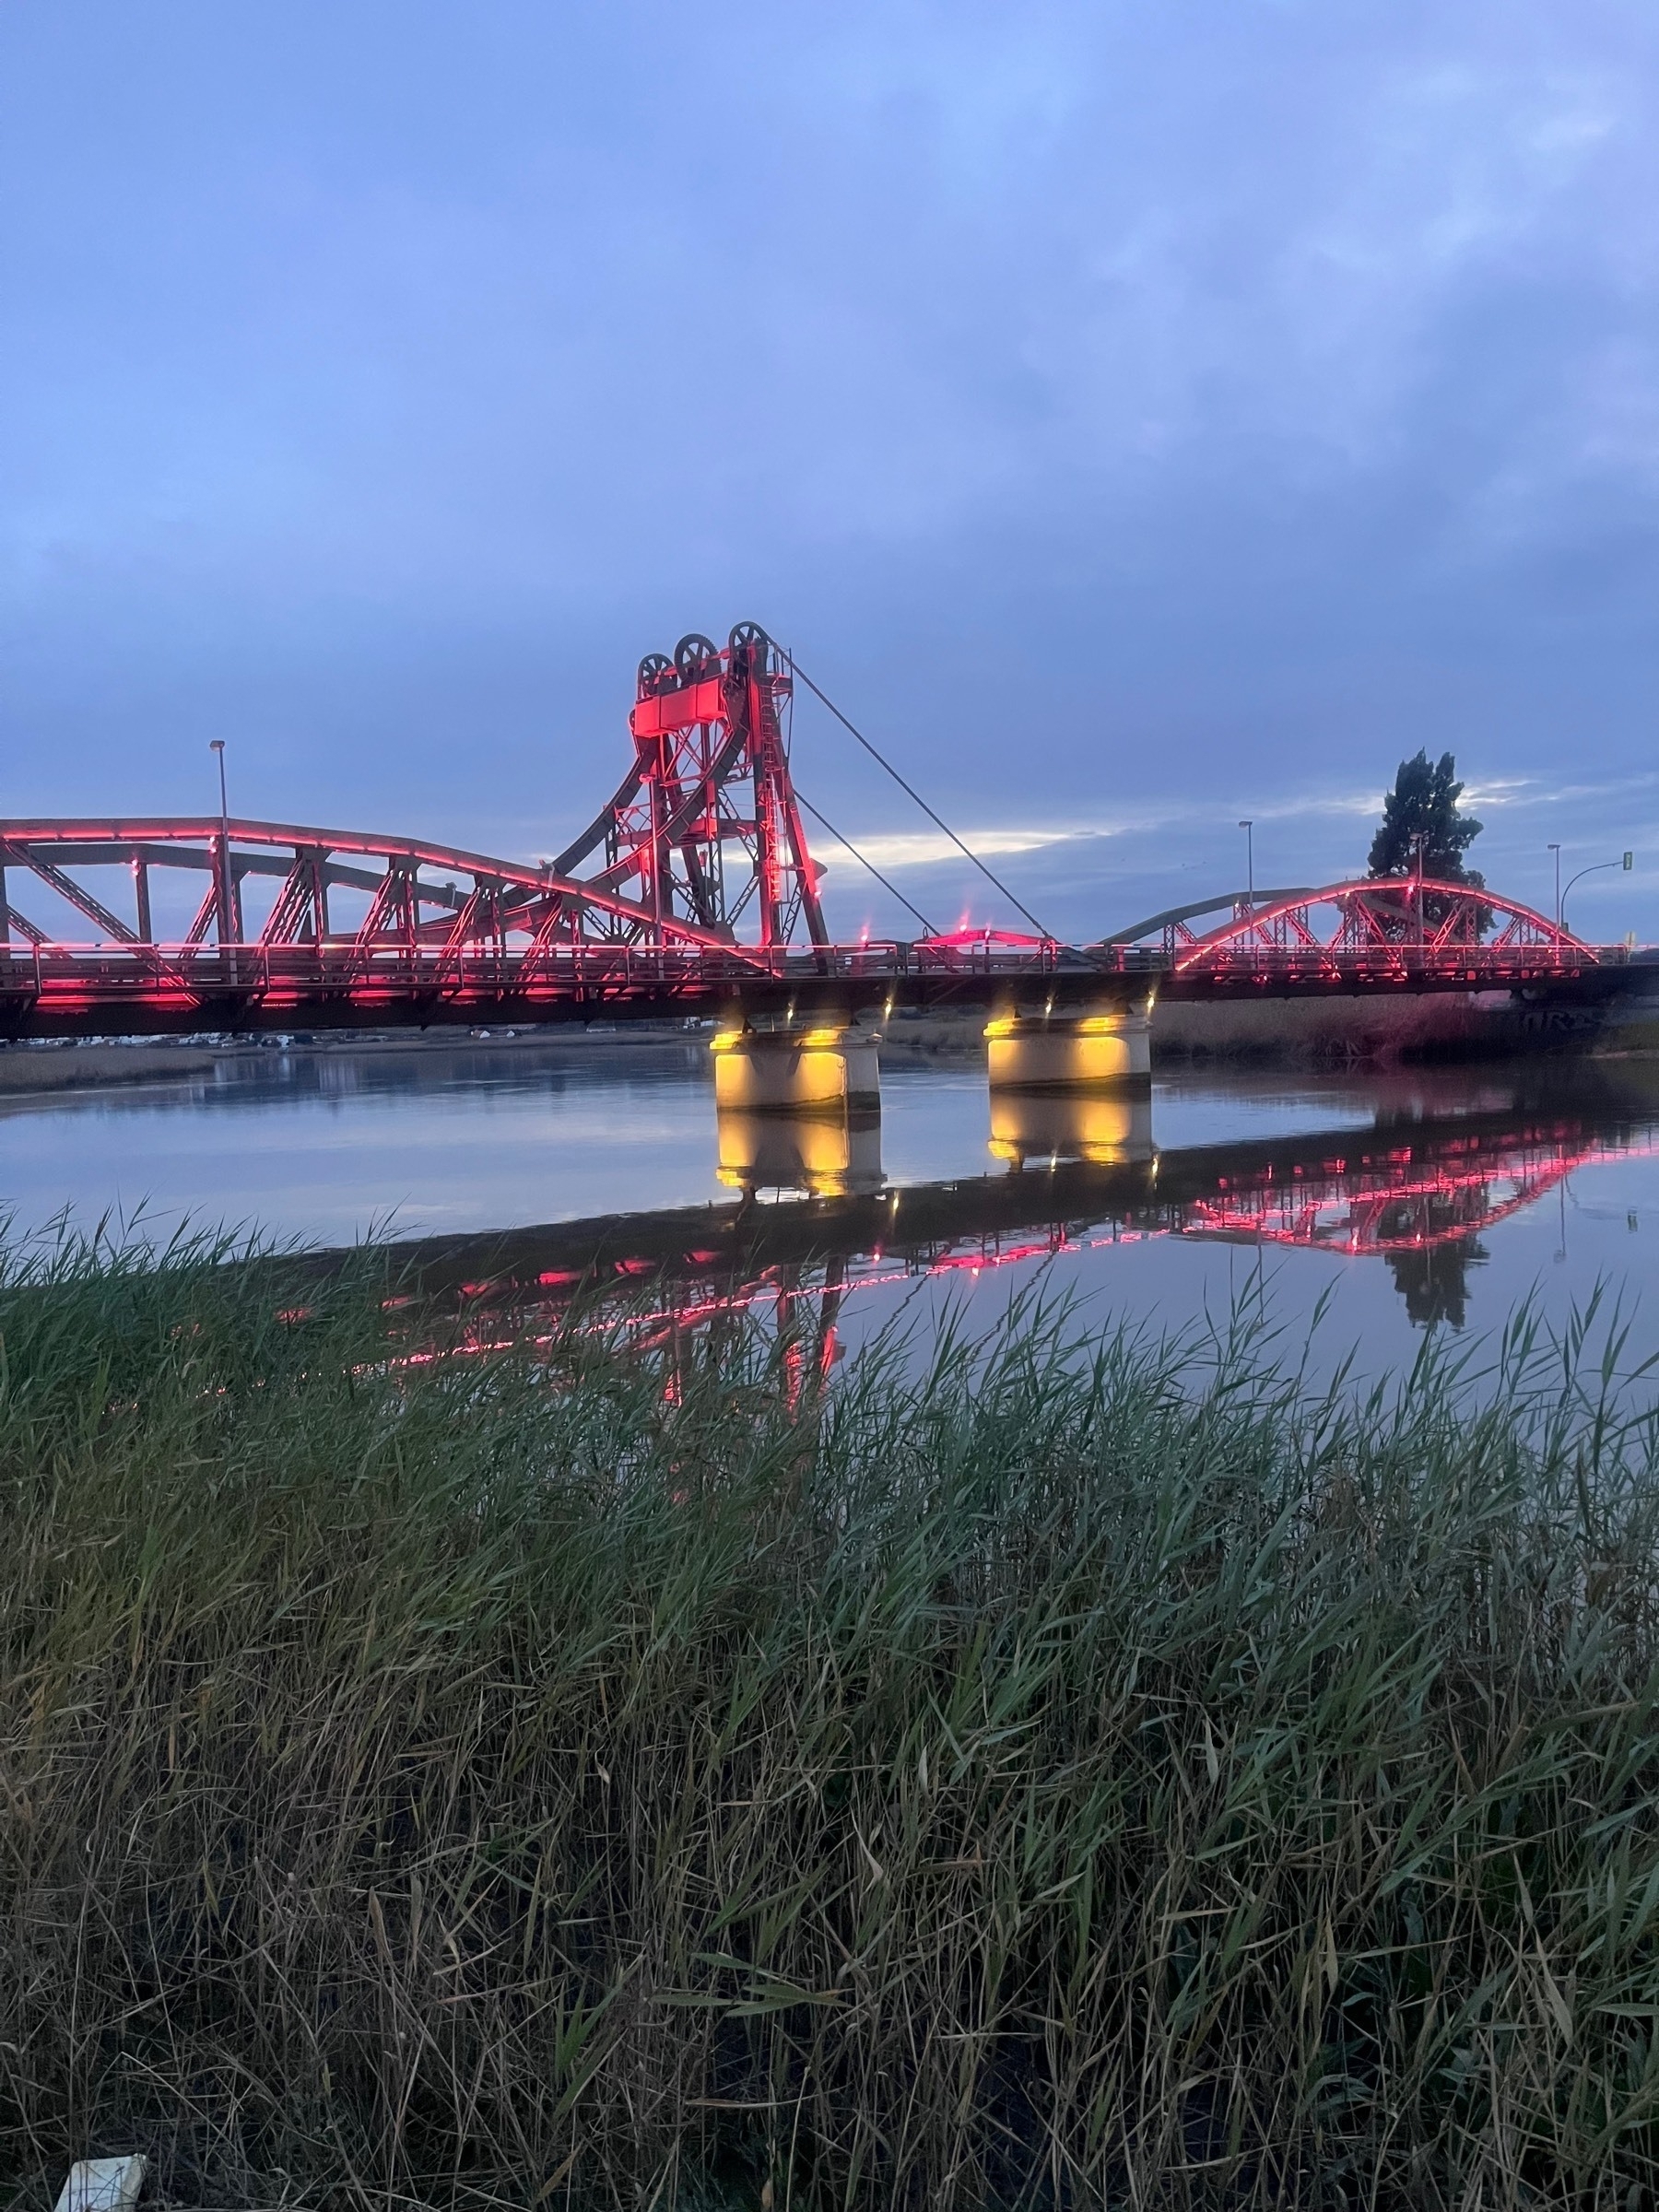 Bridge over the River Sado lit up with red lights